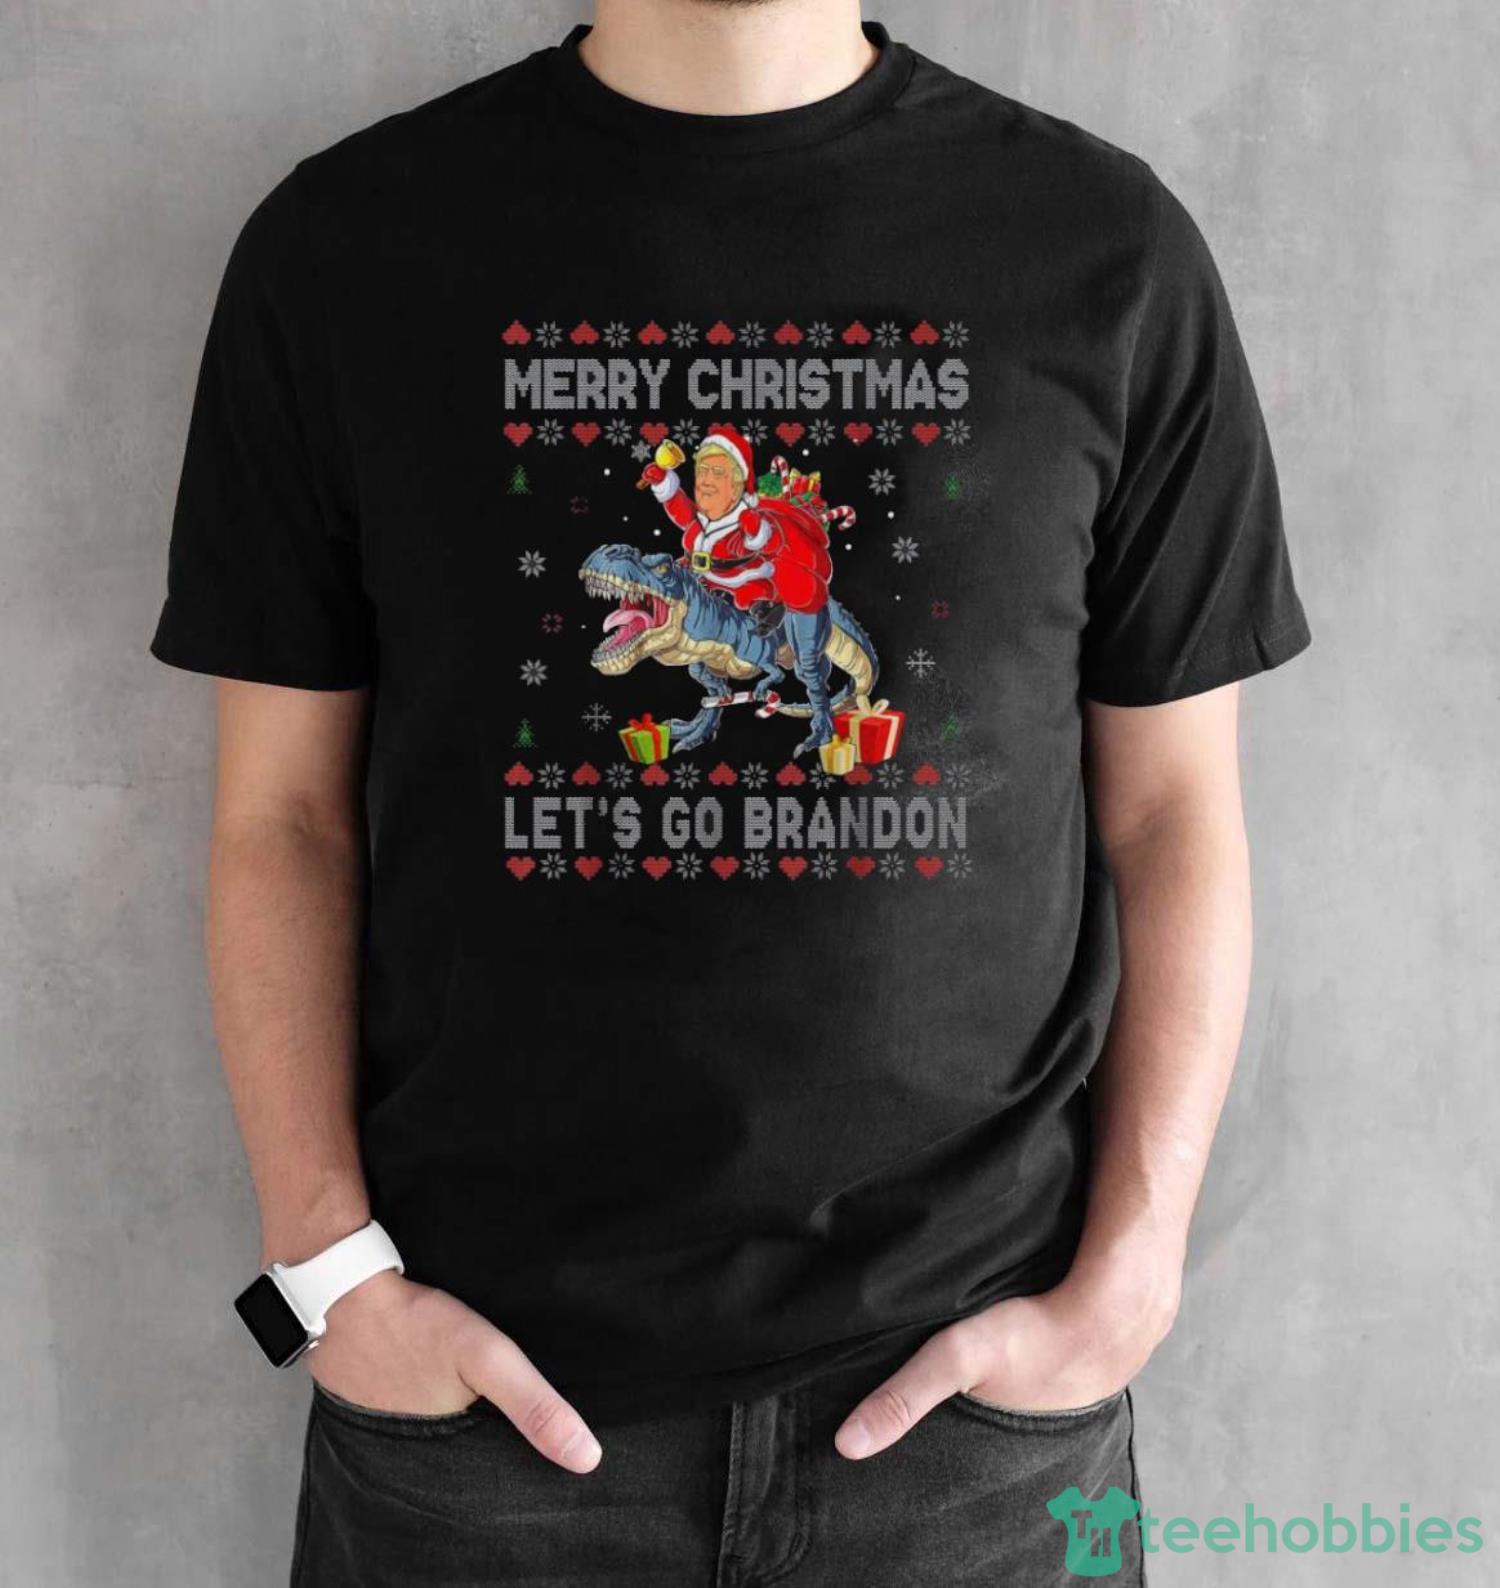 Santa Donald Trump riding Dinosaurs let’s go brandon Ugly Merry Christmas sweater - Black Unisex T-Shirt